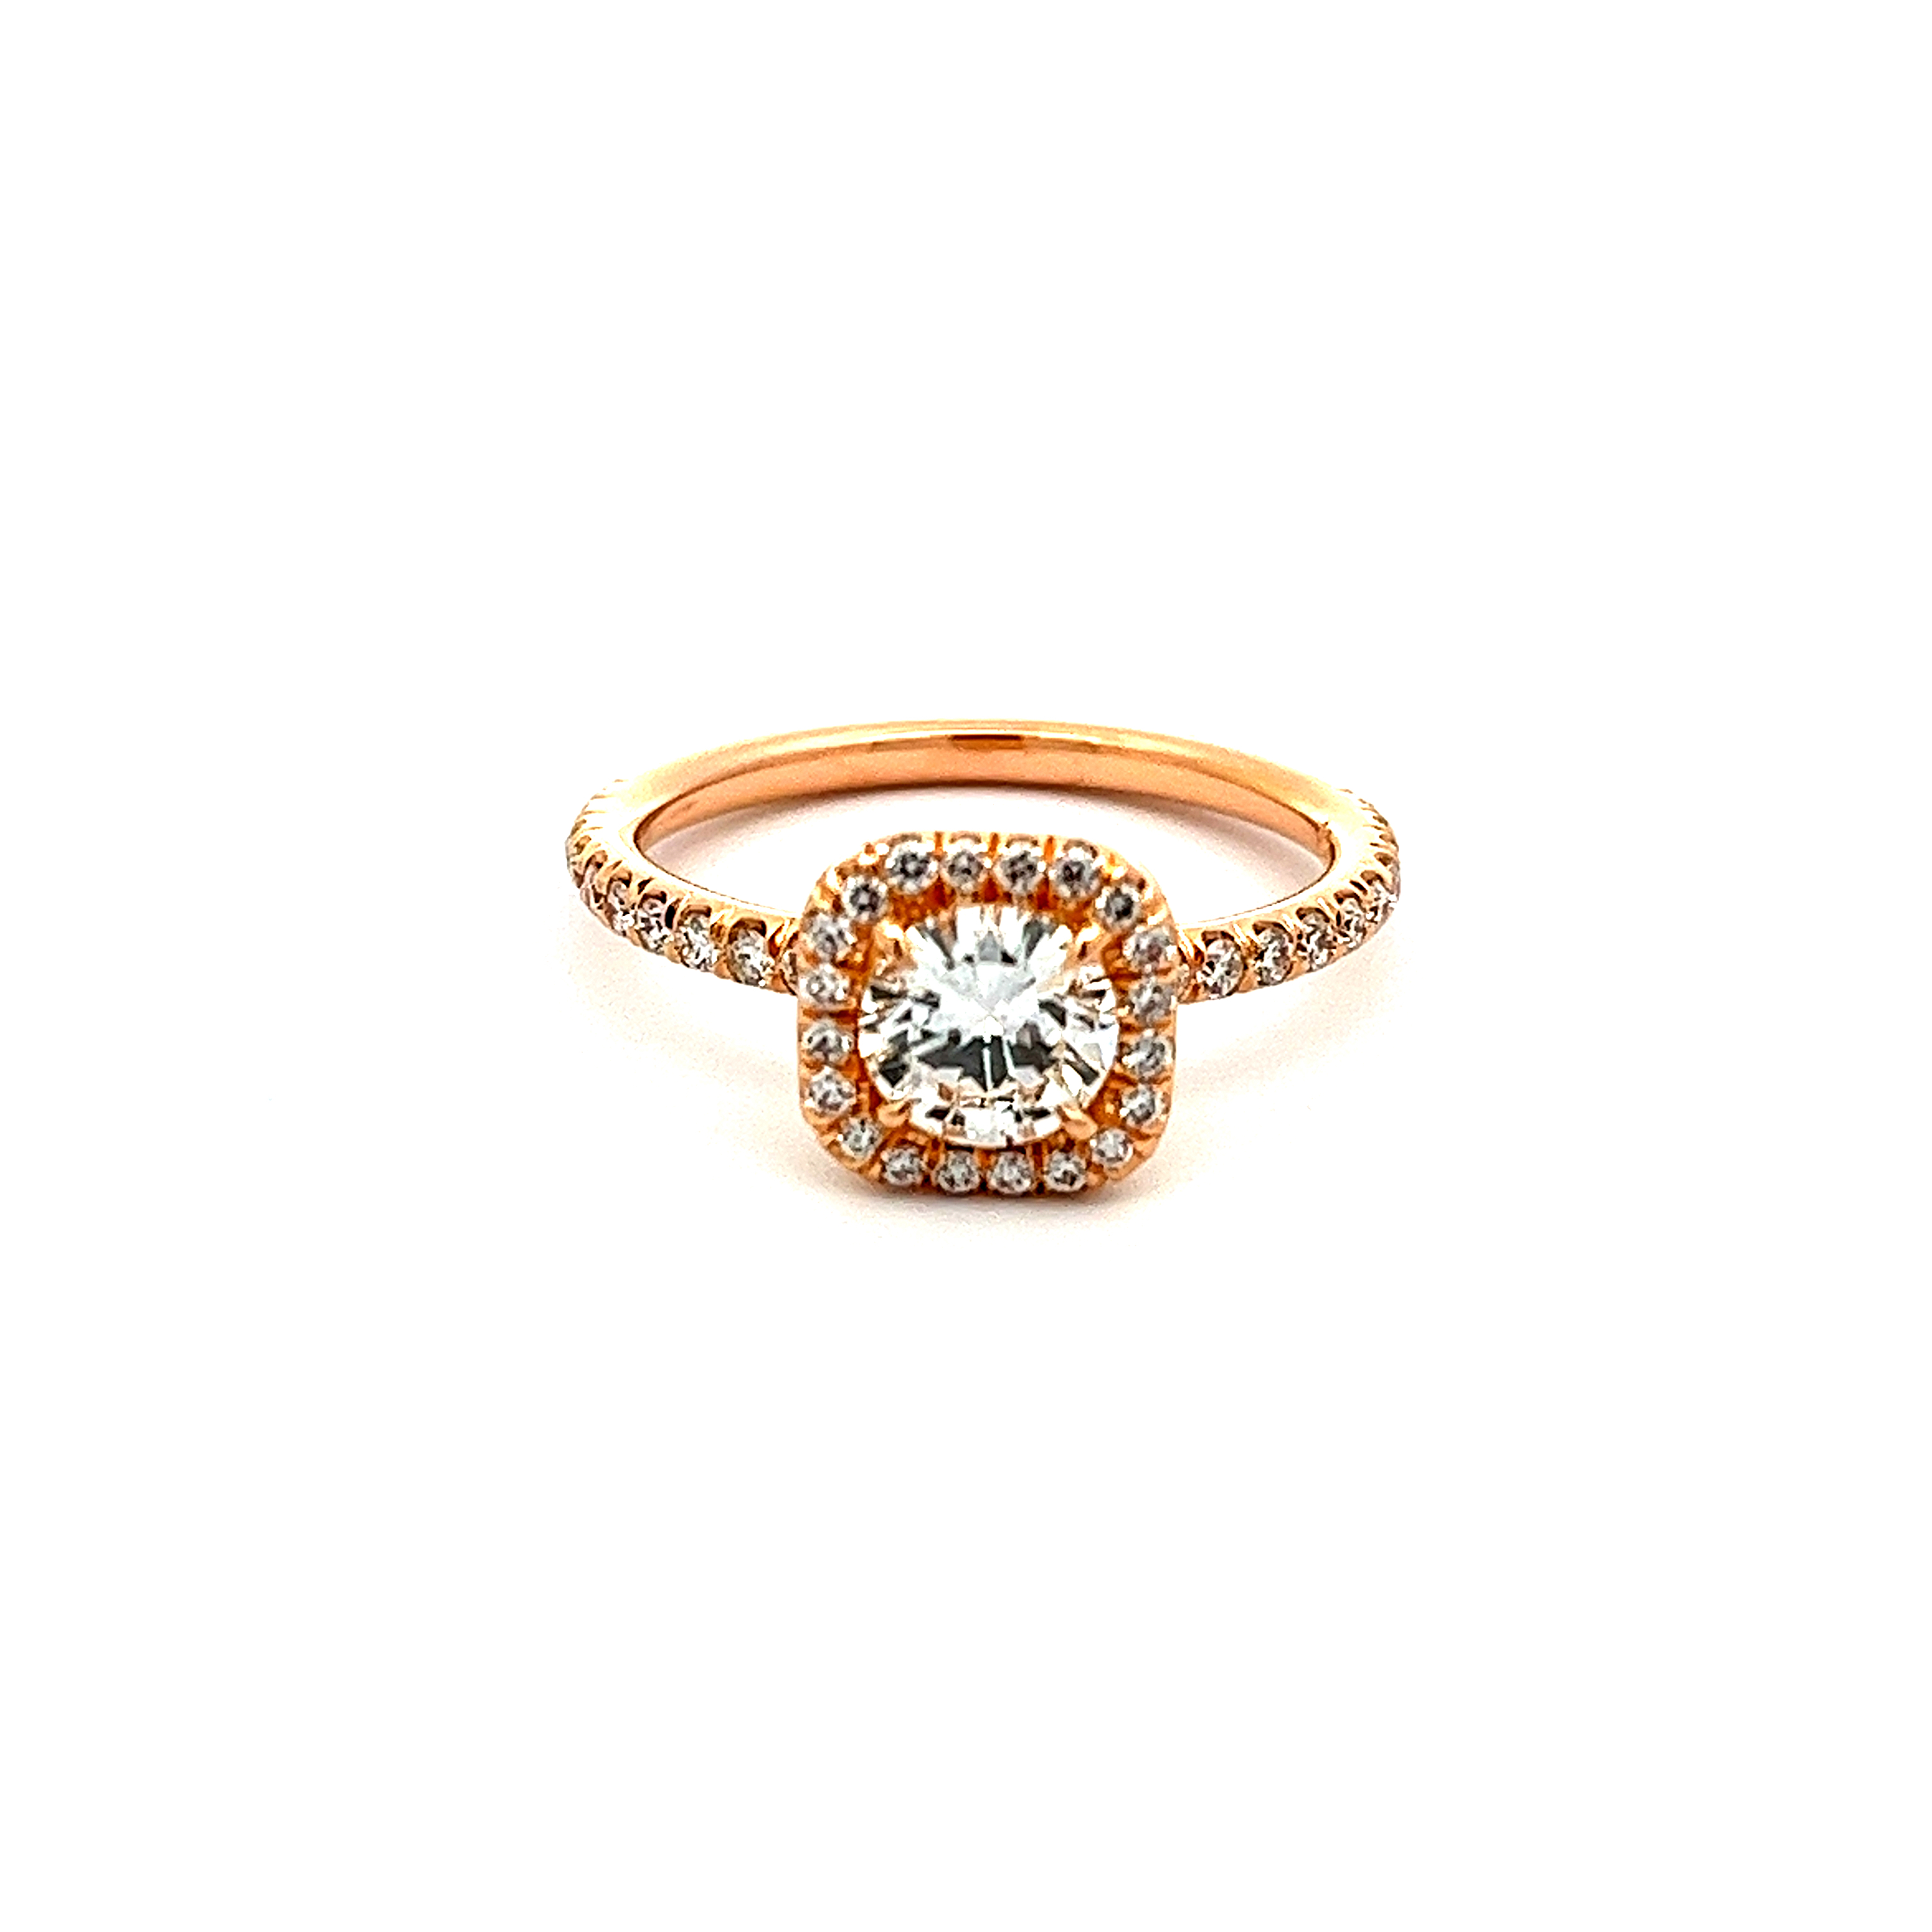 An 18k Rose Gold Round Diamond Engagement Ring